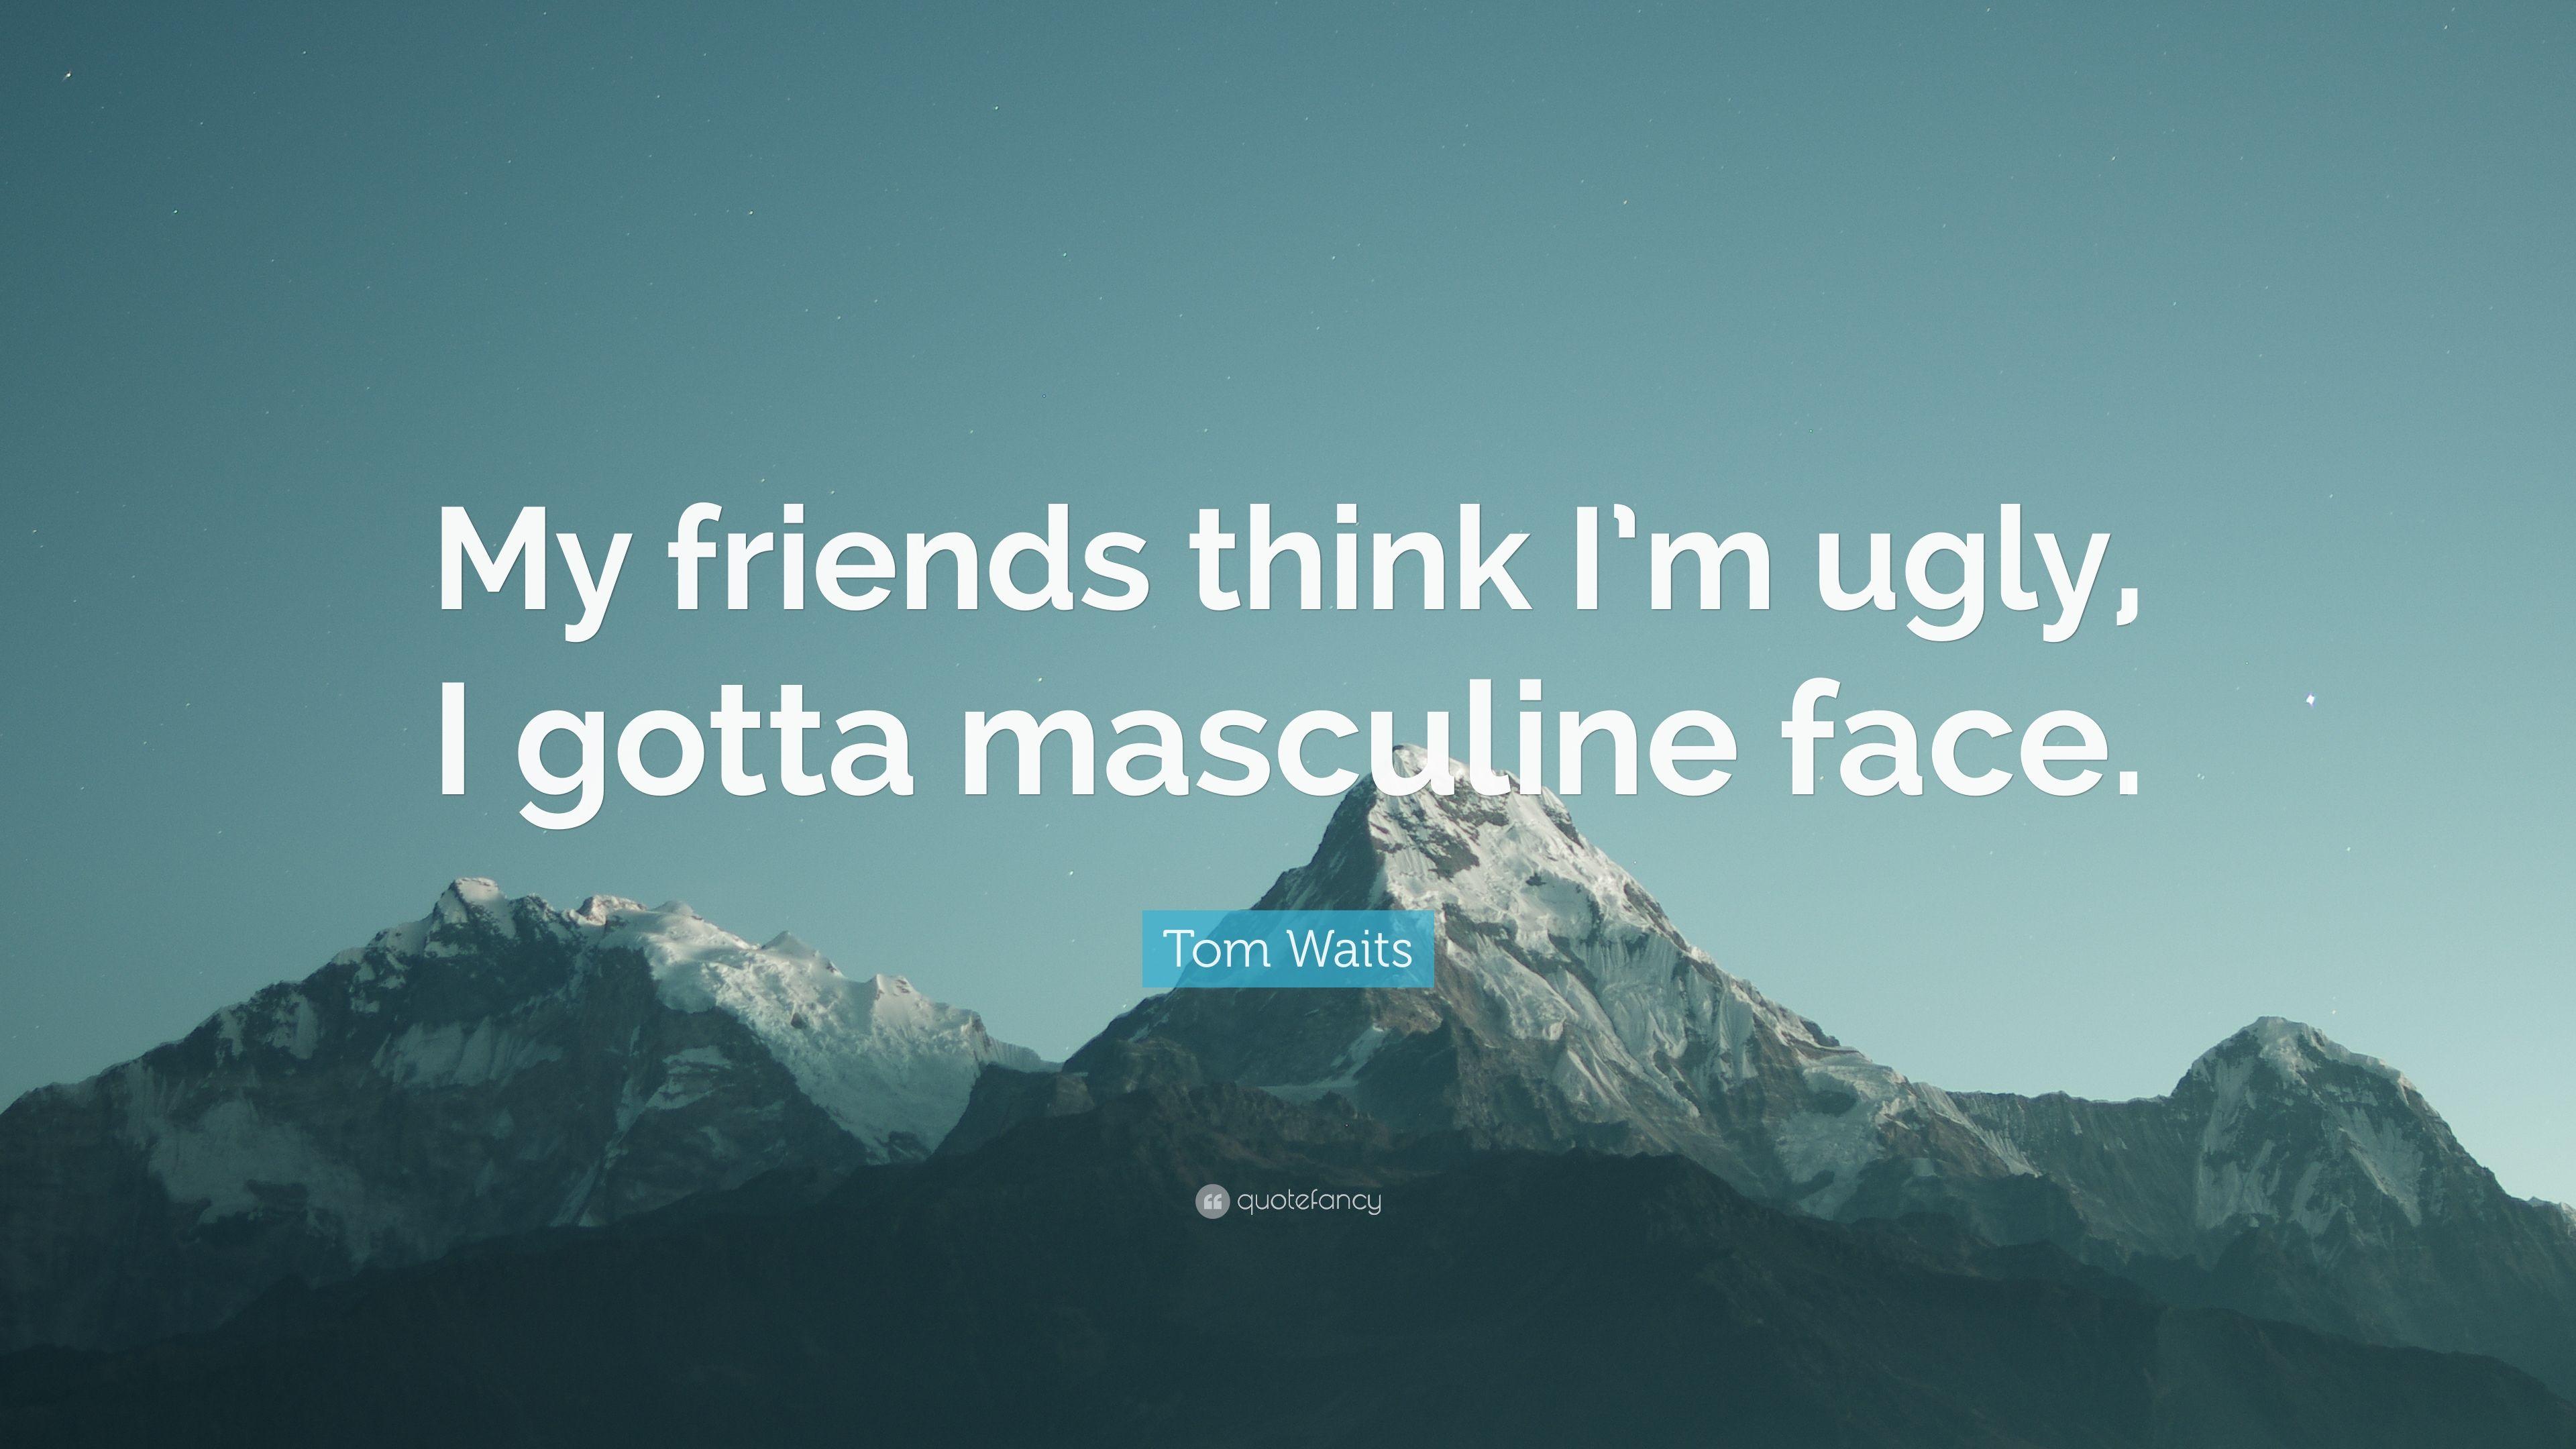 Tom Waits Quote: “My friends think I'm ugly, I gotta